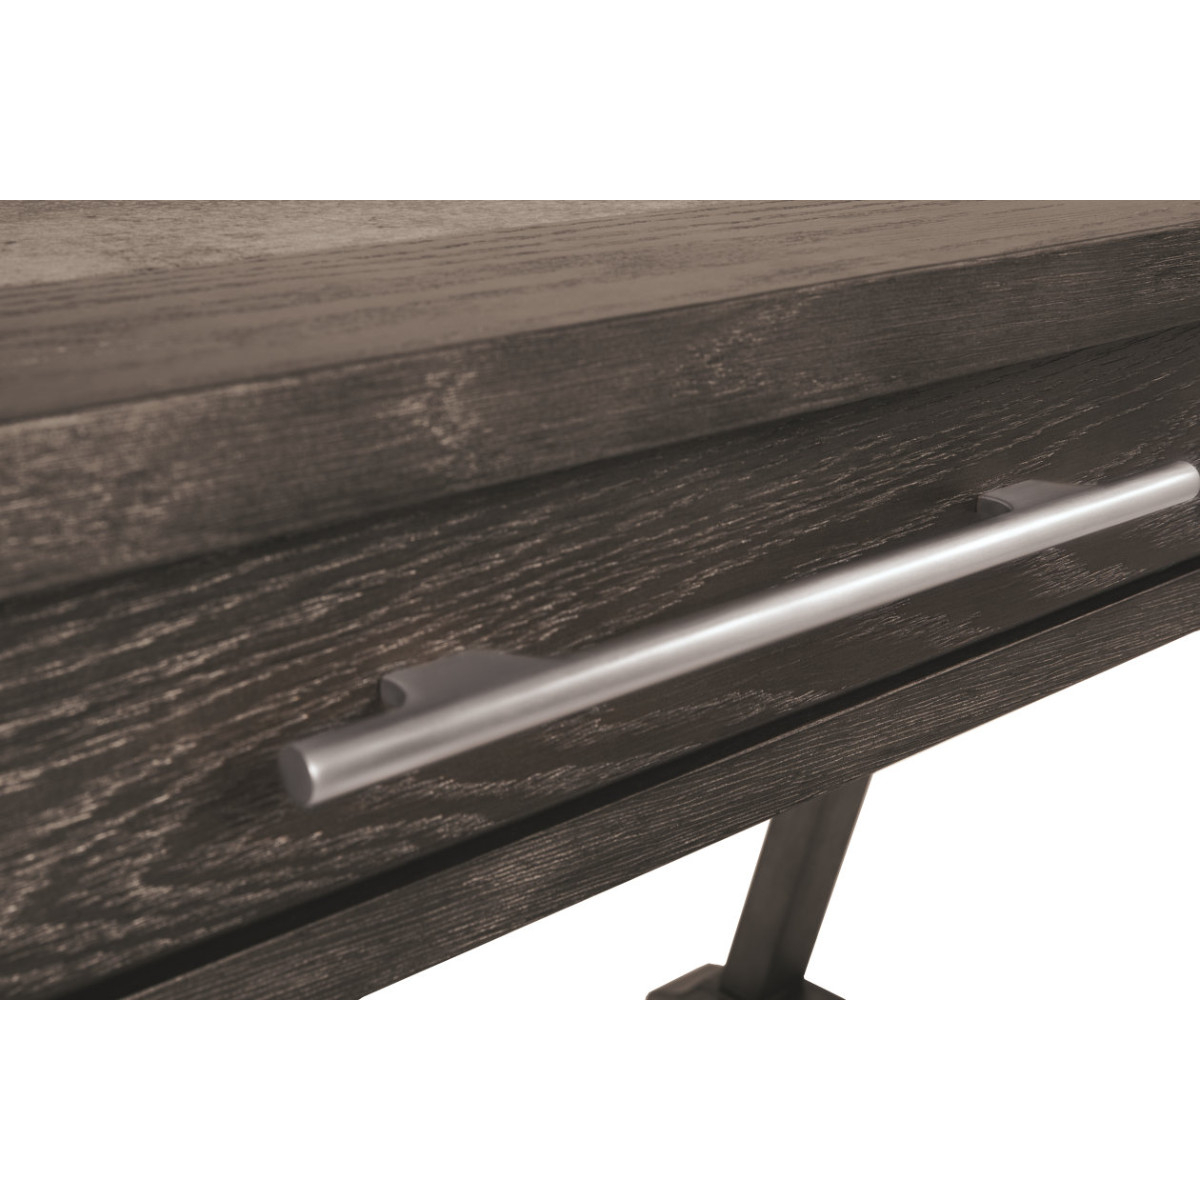 Three Drawer Wooden Desk With Cross Brace Stretcher And Faux Bluestone Top, Gray- Saltoro Sherpi